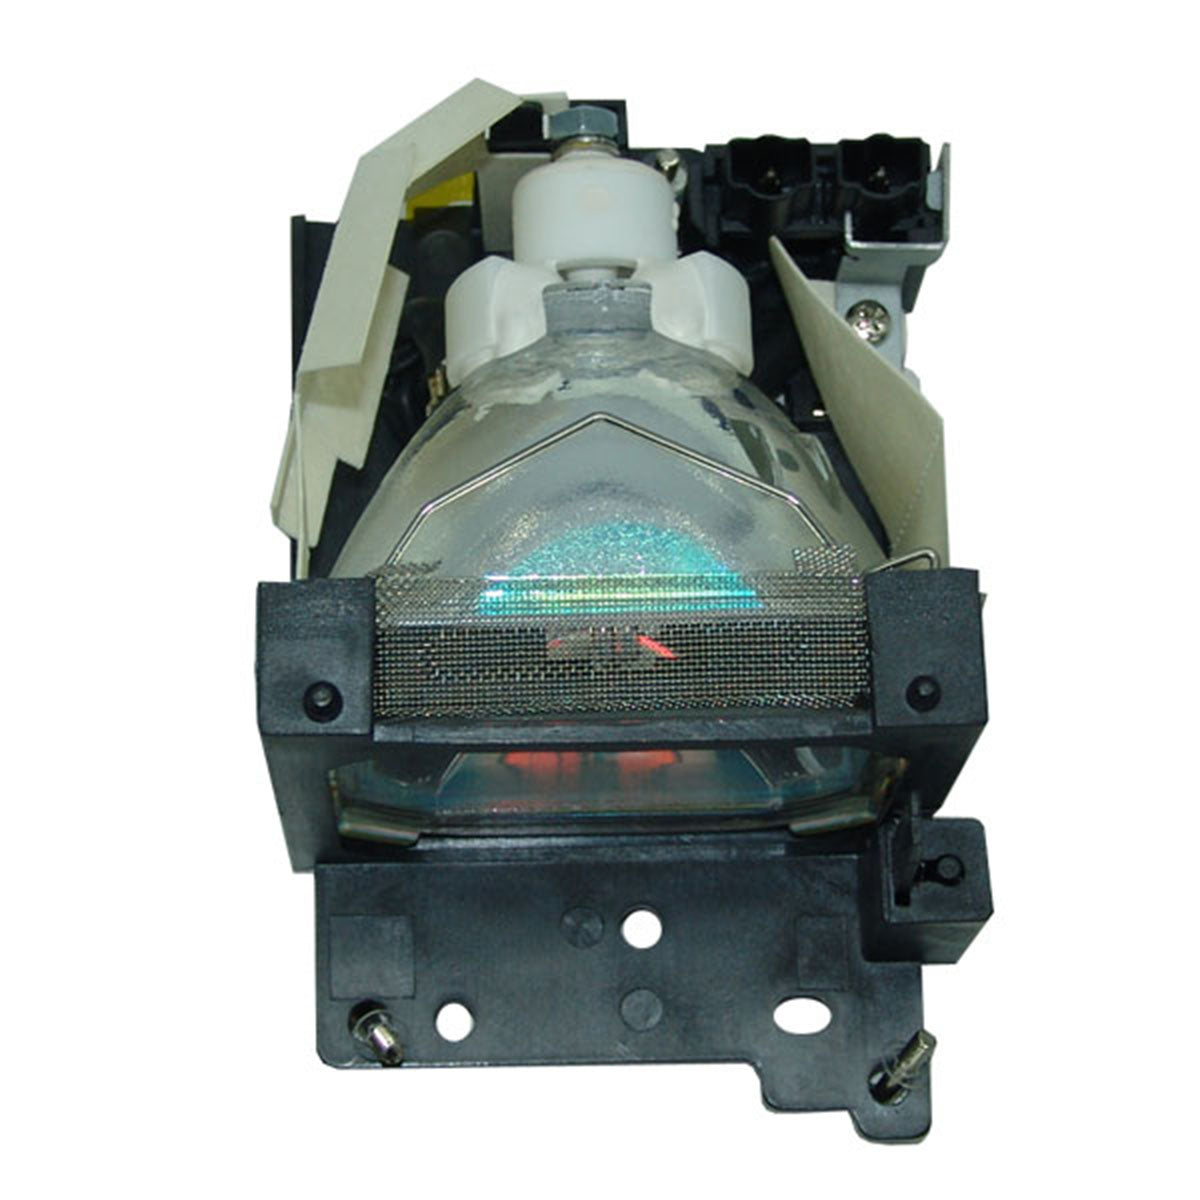 Viewsonic RLC-160-001 Compatible Projector Lamp Module